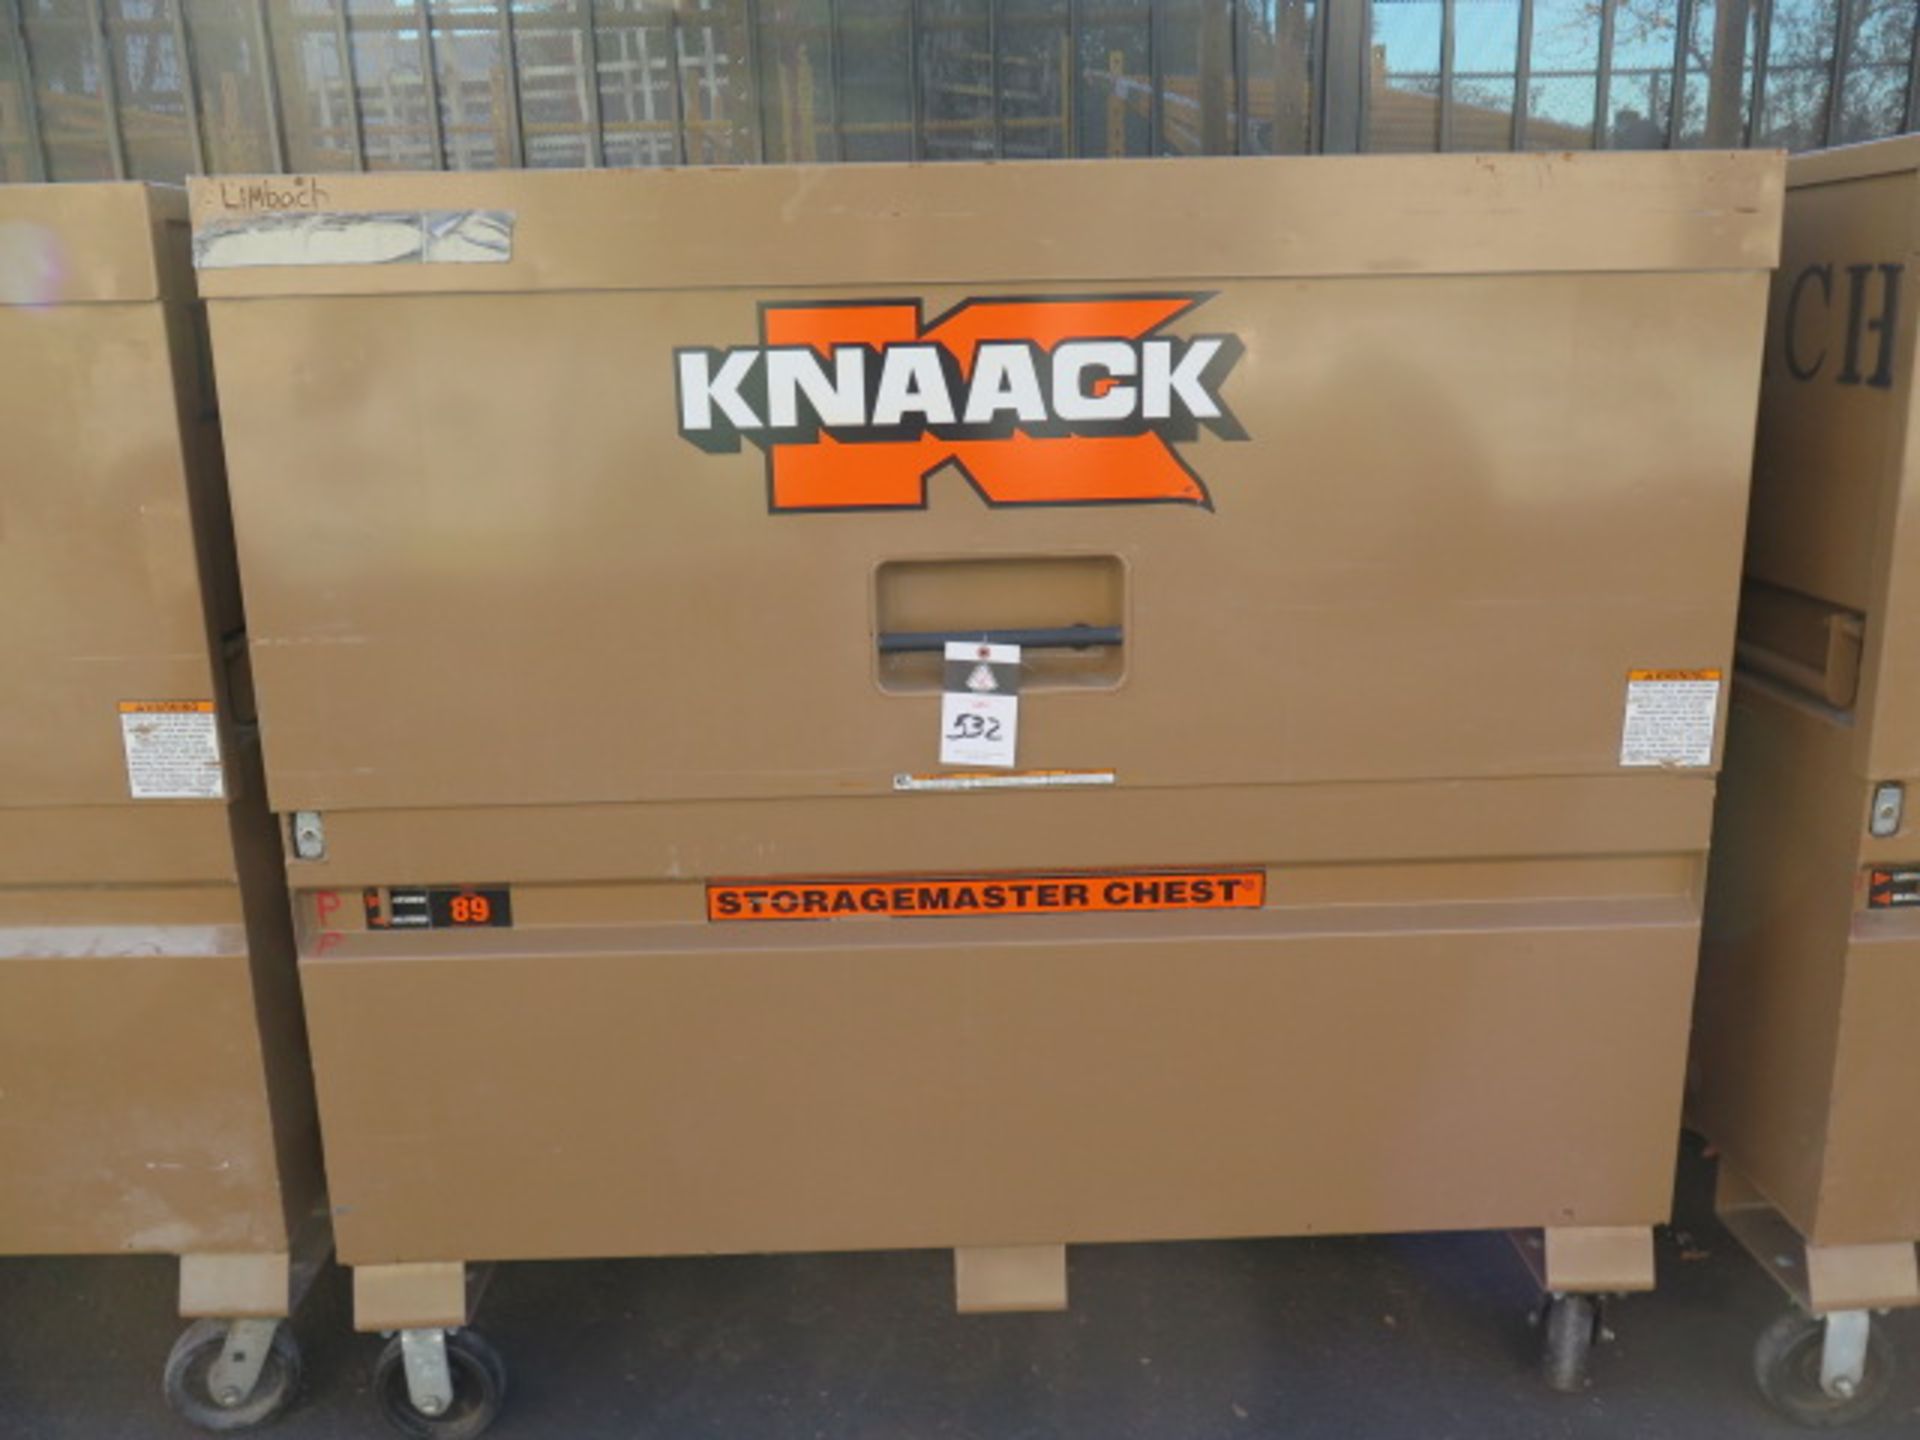 Knaack mdl. 89 "Storage Master" Rolling Job Box (SOLD AS-IS - NO WARRANTY)